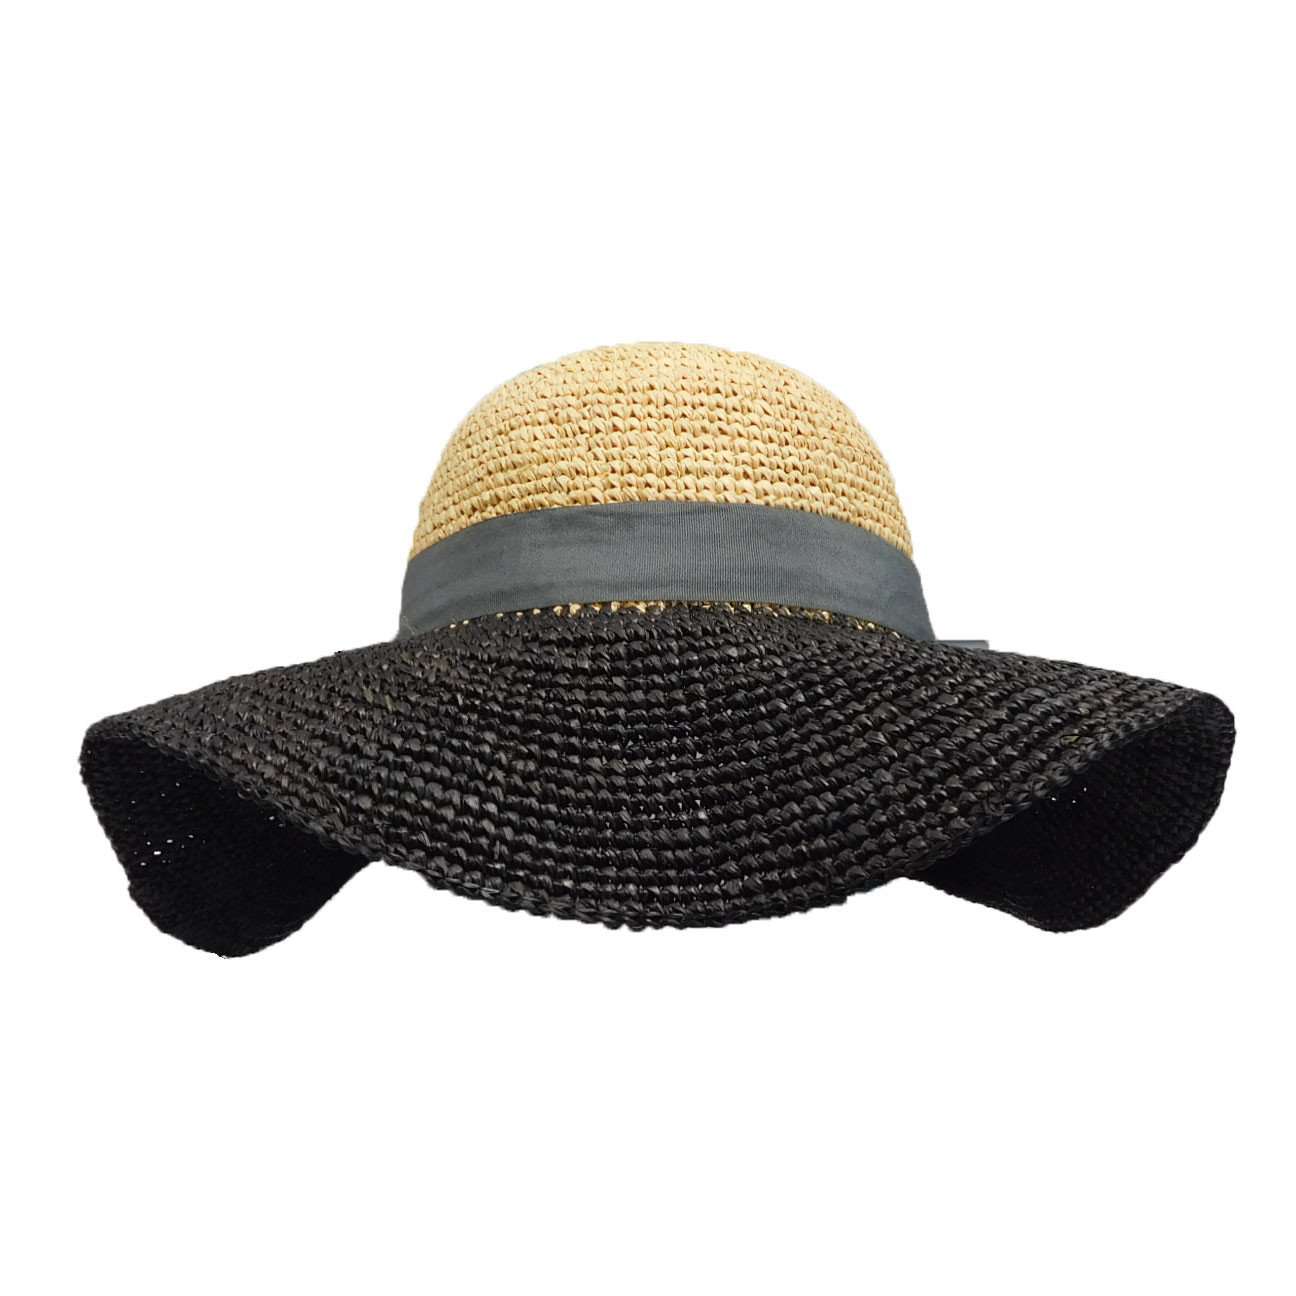 Black and Natural Two Tone Crocheted Raffia Sun Hat - Boardwalk Style, Wide Brim Sun Hat - SetarTrading Hats 